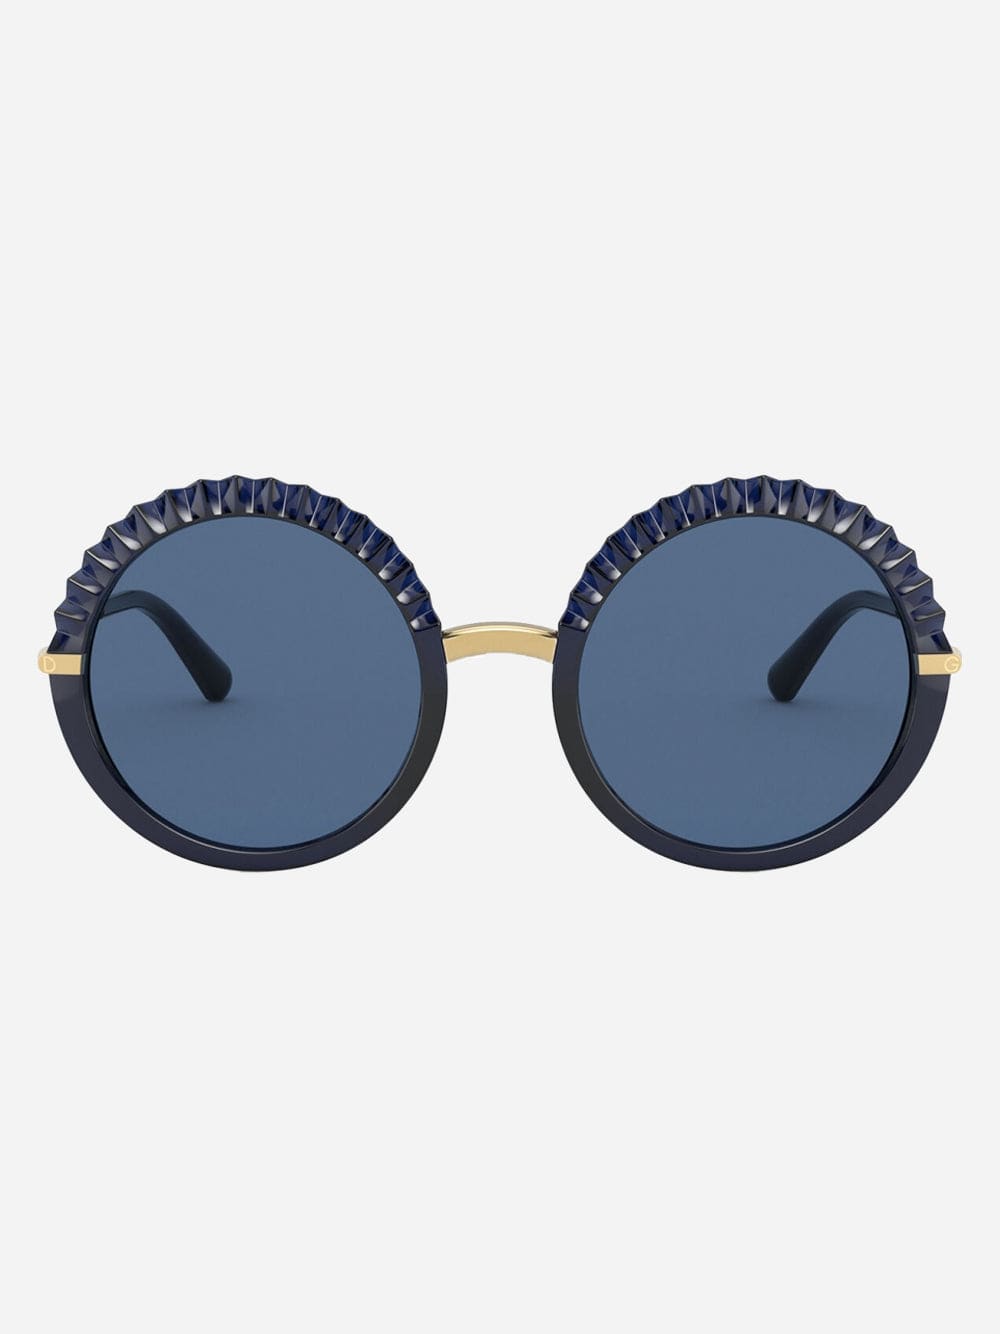 Dolce & Gabbana DG6130 Opal Sunglasses